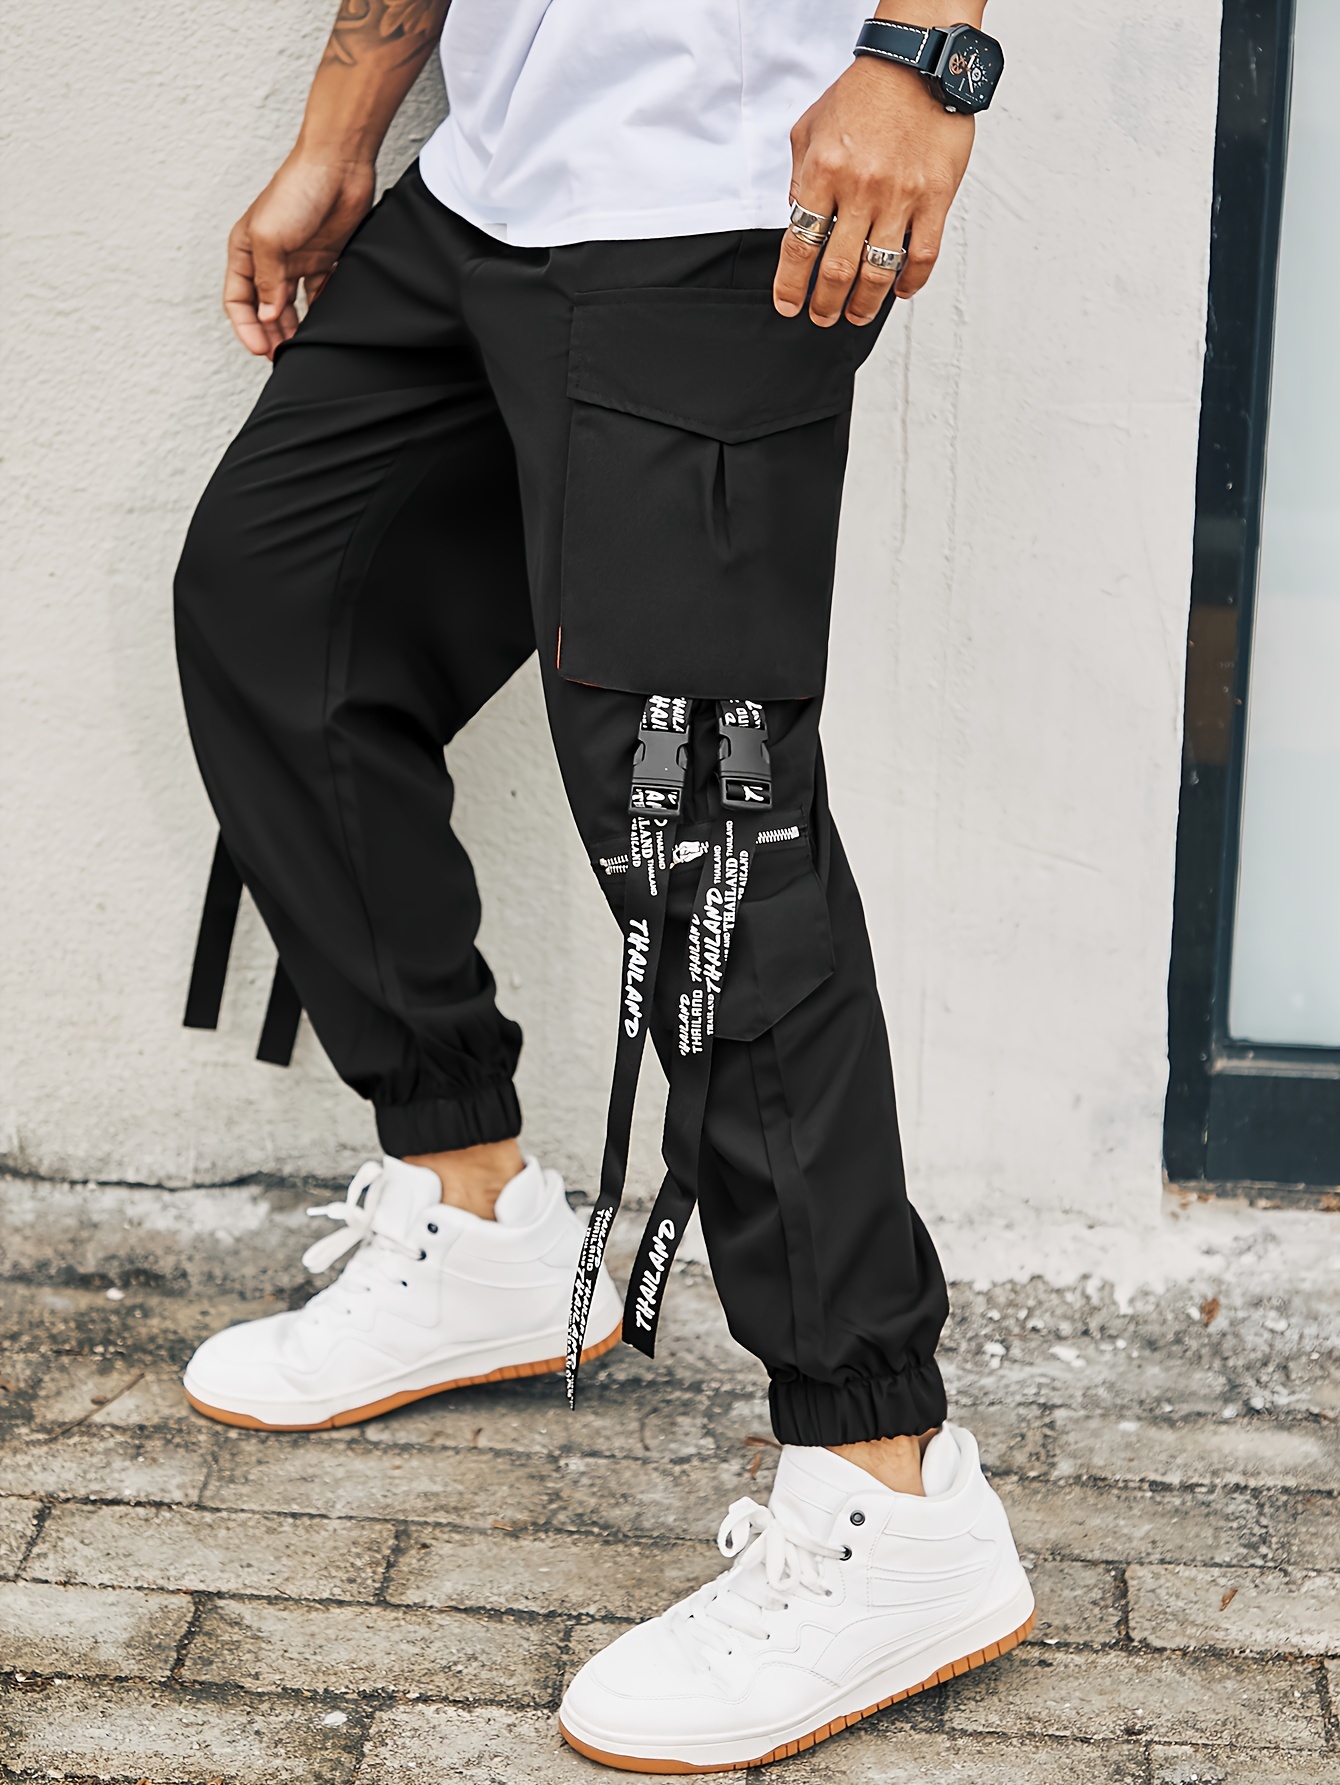 WANYNG pants for men Men's Fashion Casual Large Size Zipper